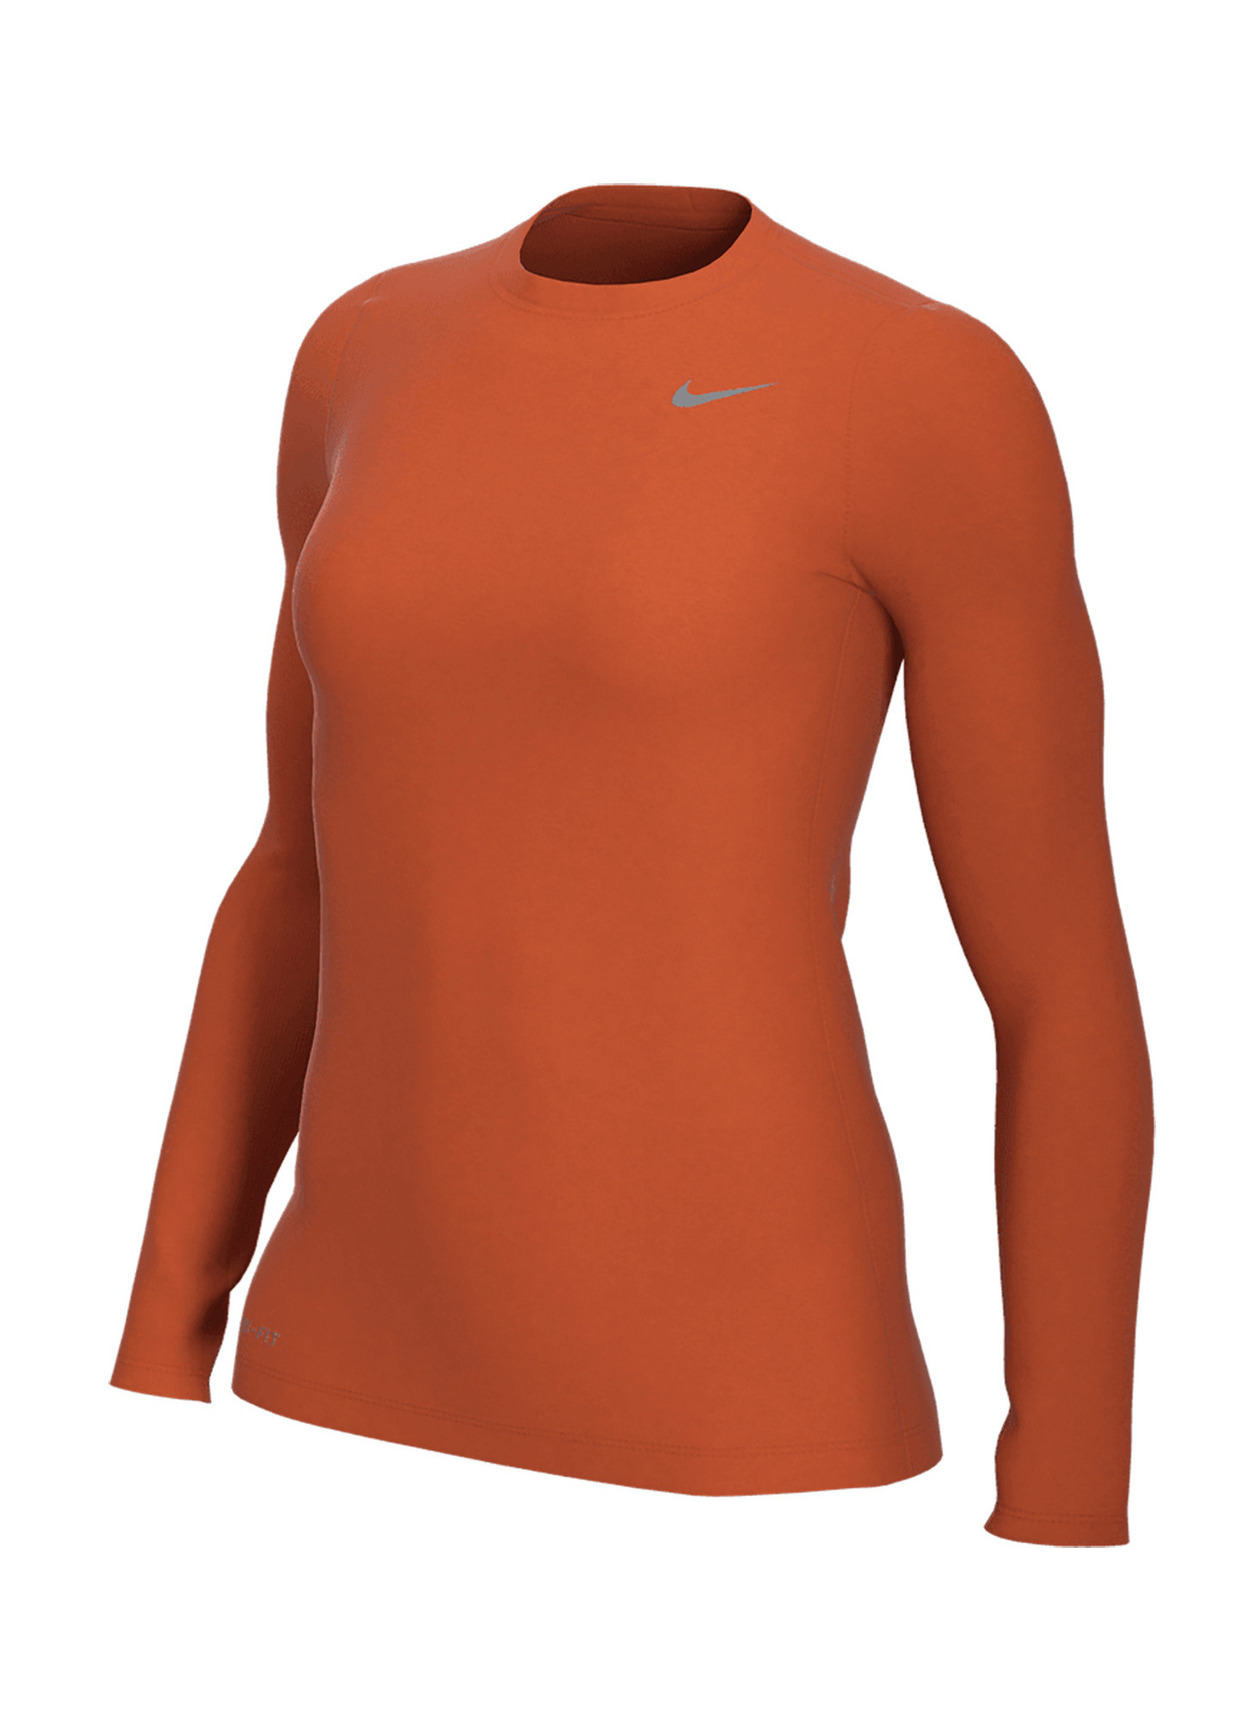 Nike Women's University Orange Legend Long-Sleeve Training T-Shirt